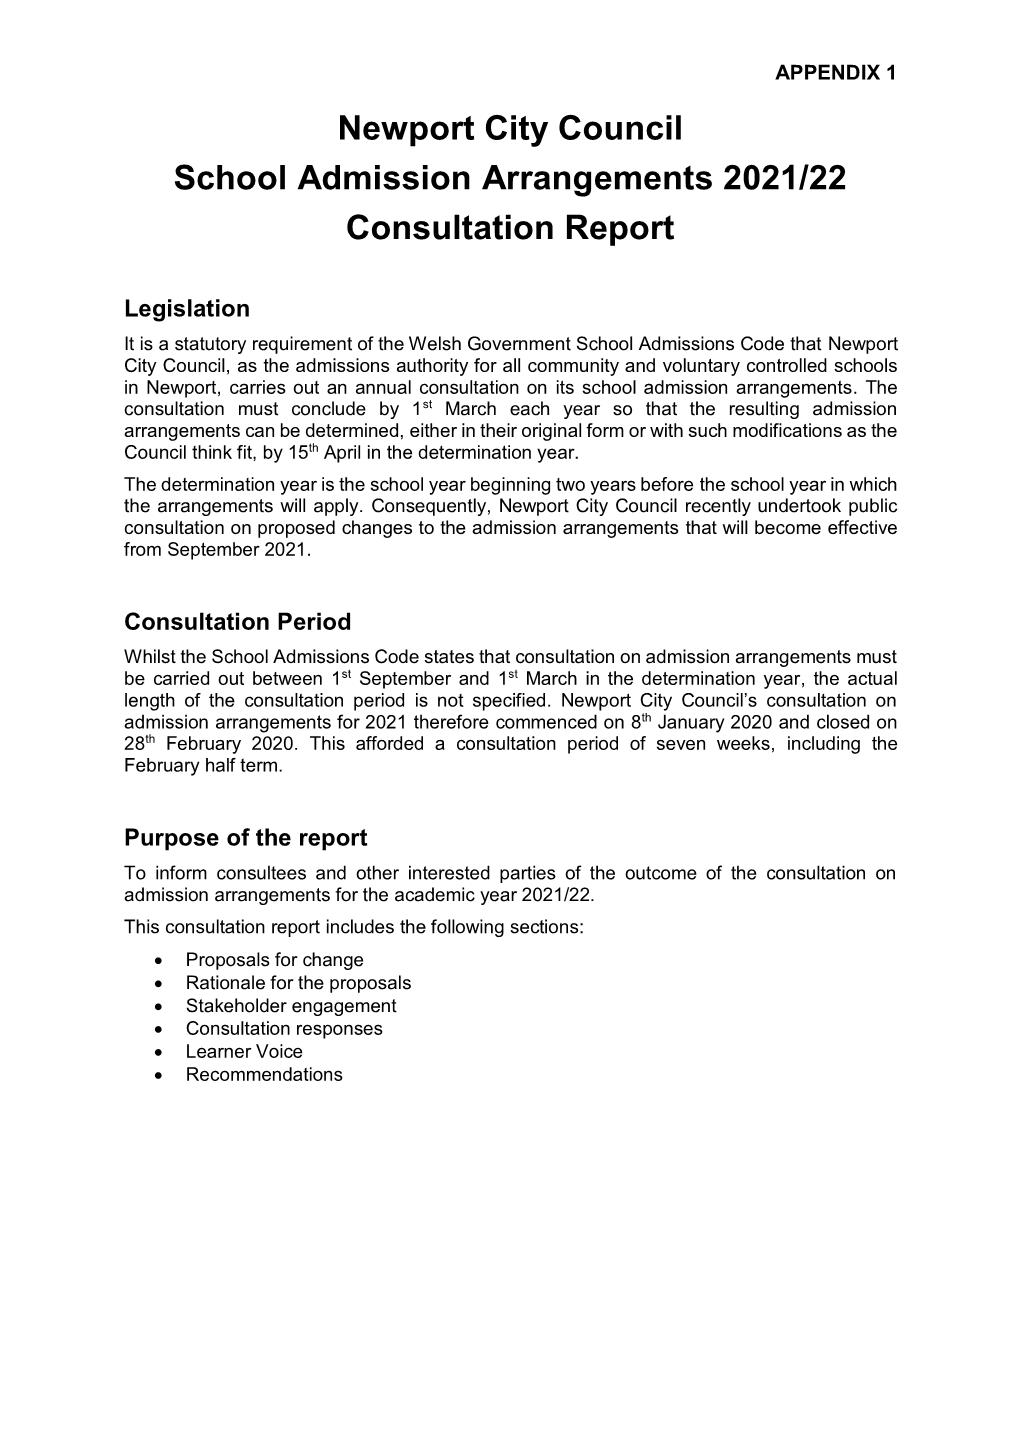 Consultation on Admission Arrangement 2021